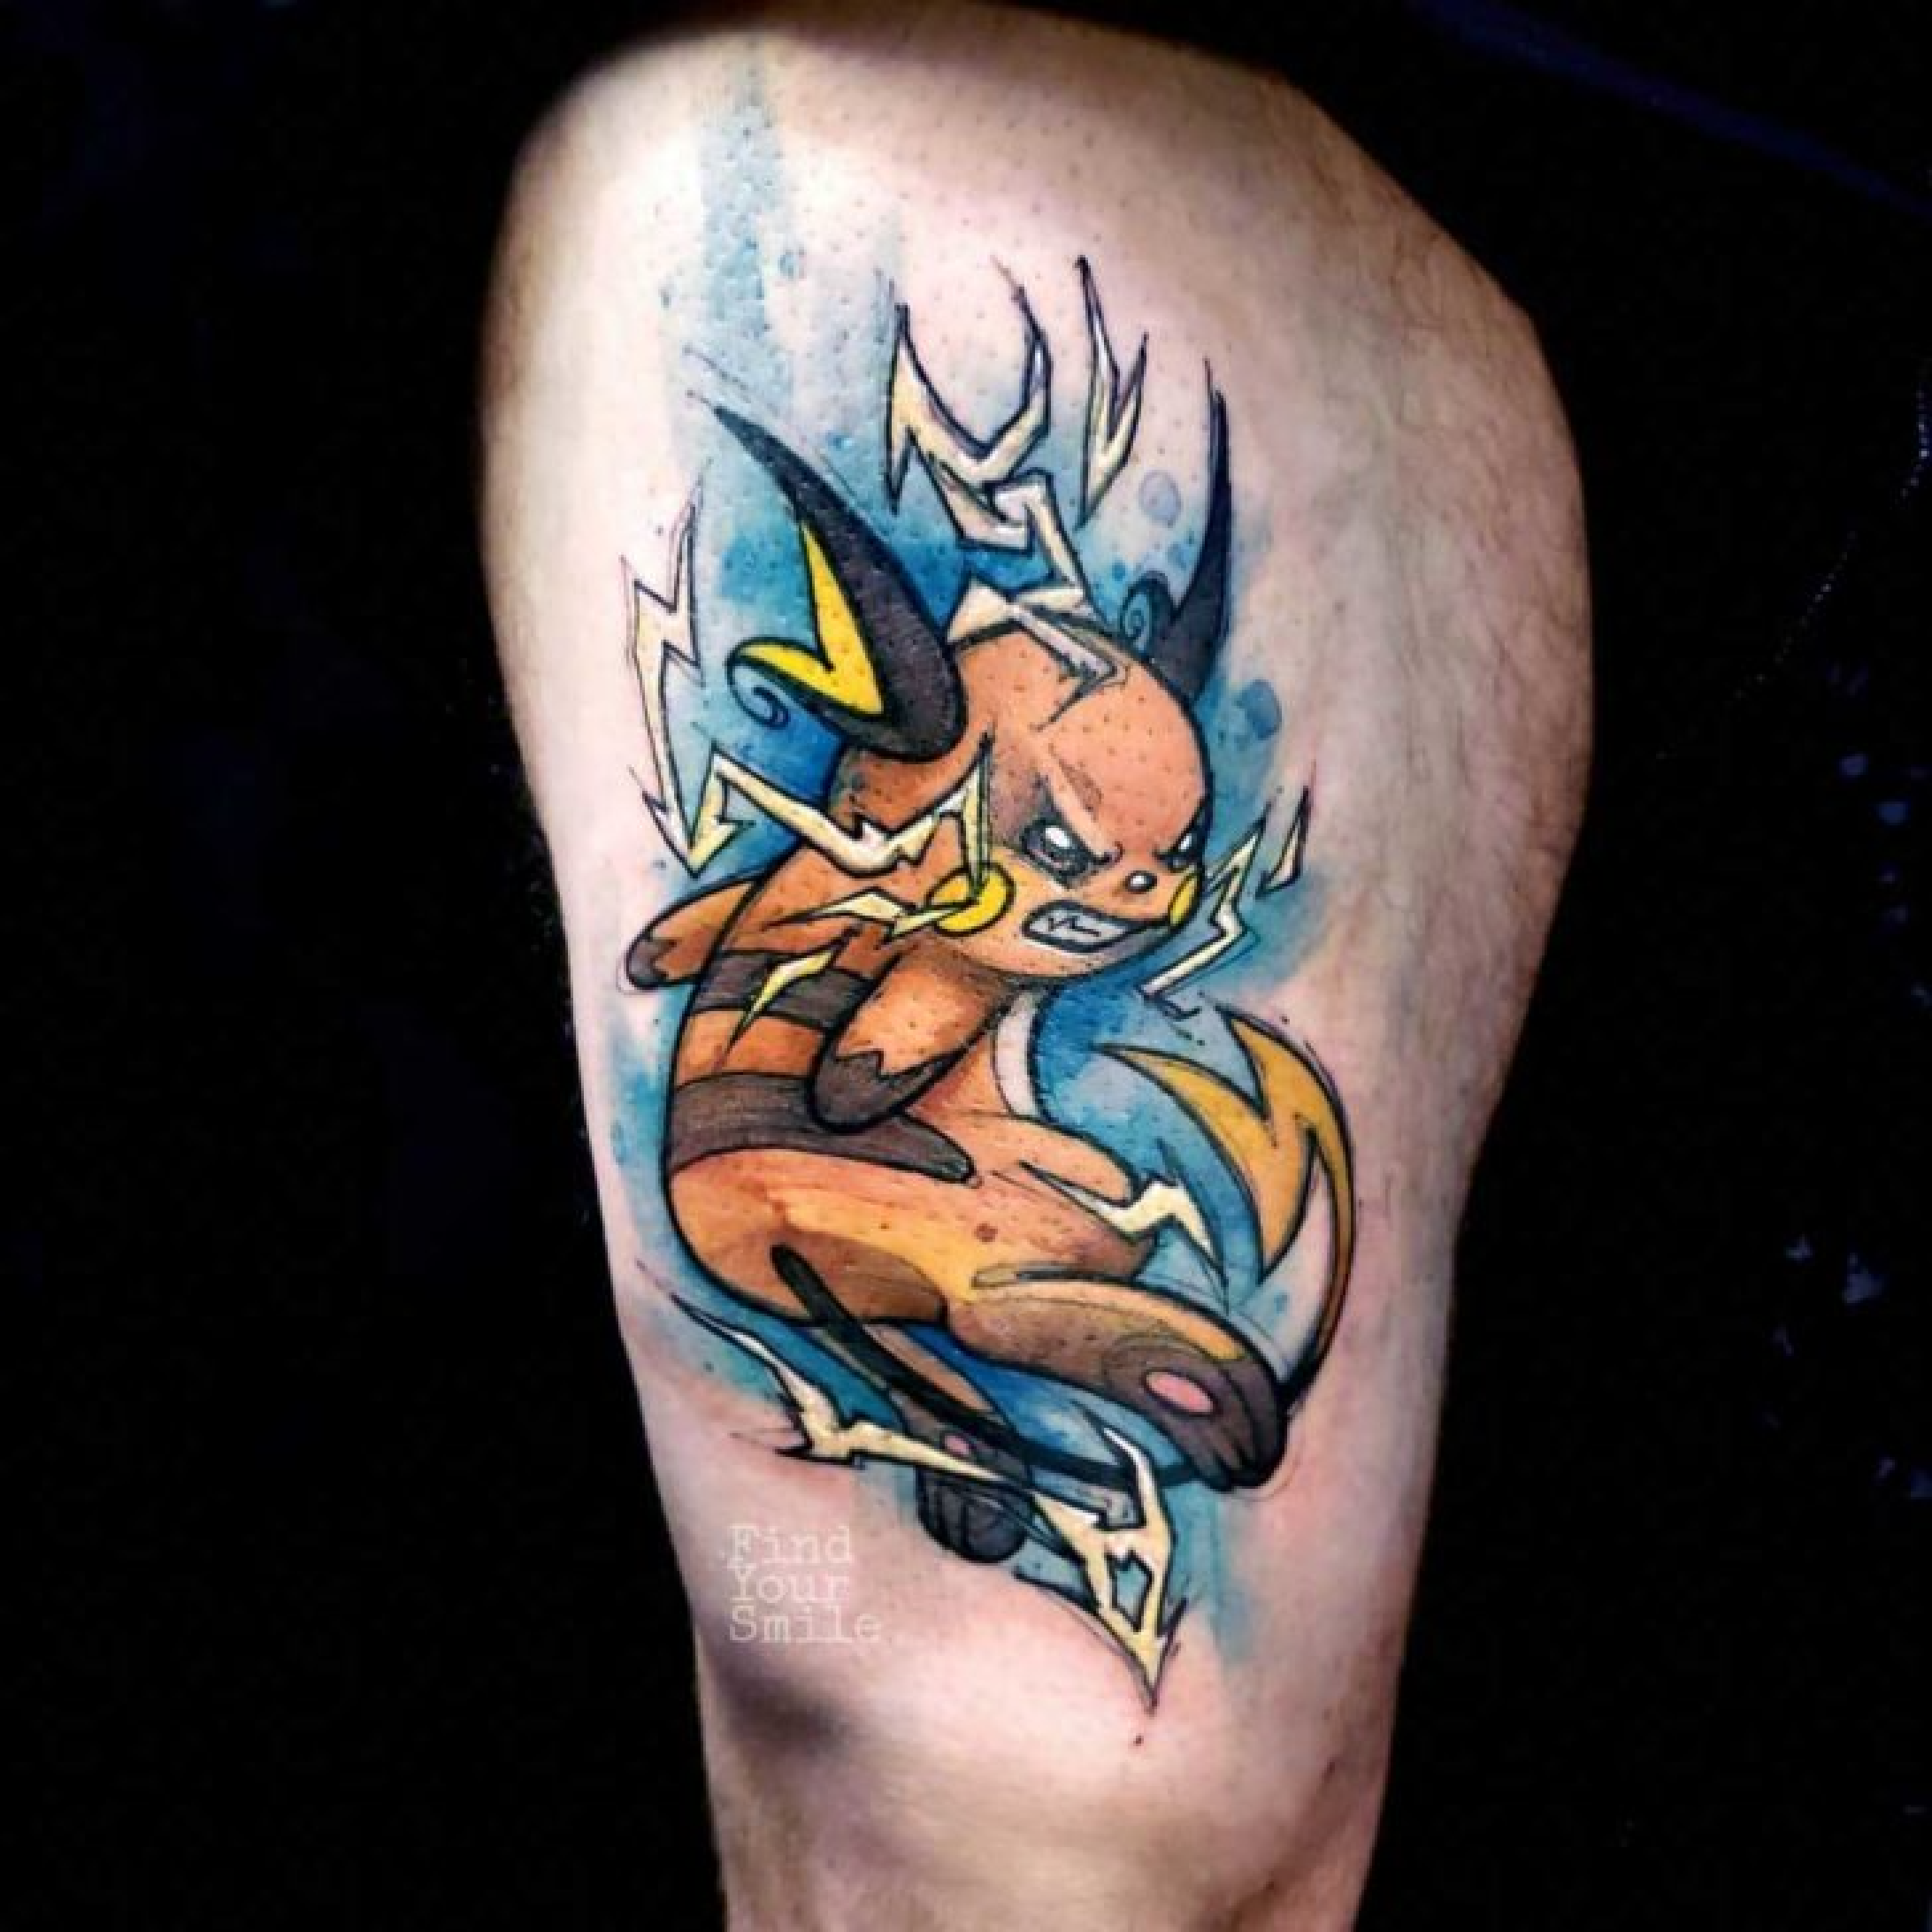 Boyfriends new Pokemon tattoo, thought you guys would like it! : r/pokemon